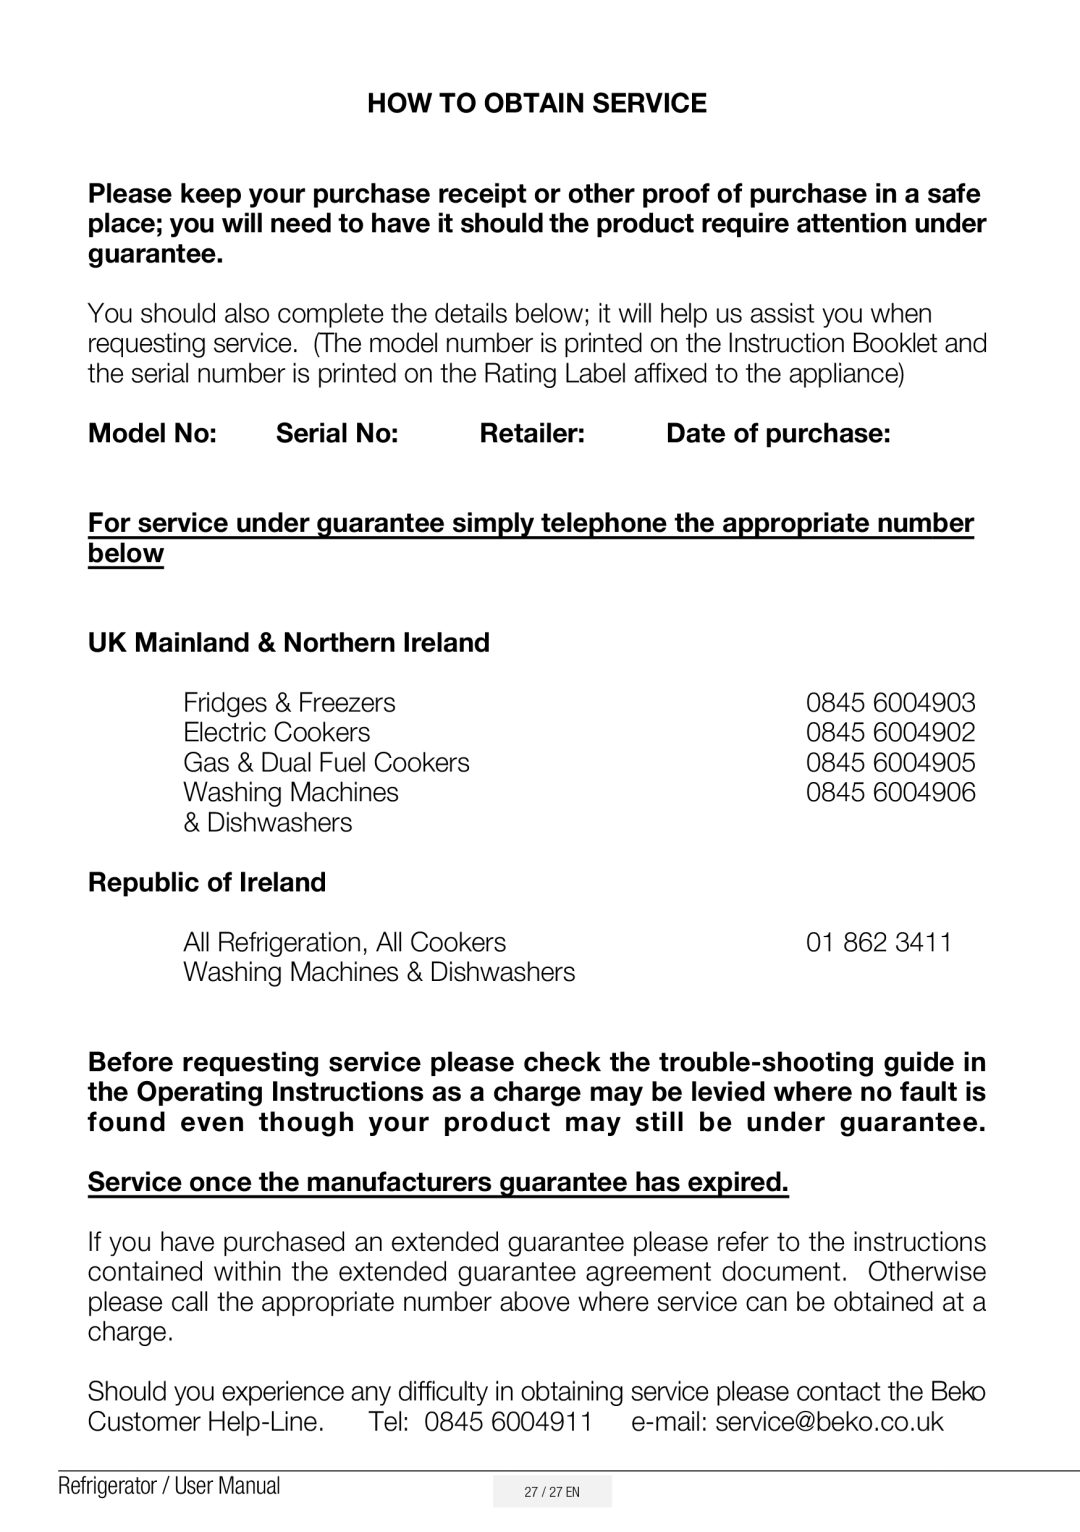 Beko ASL141S How To Obtain Service, Model No Serial No Retailer Date of purchase, below, UK Mainland & Northern Ireland 